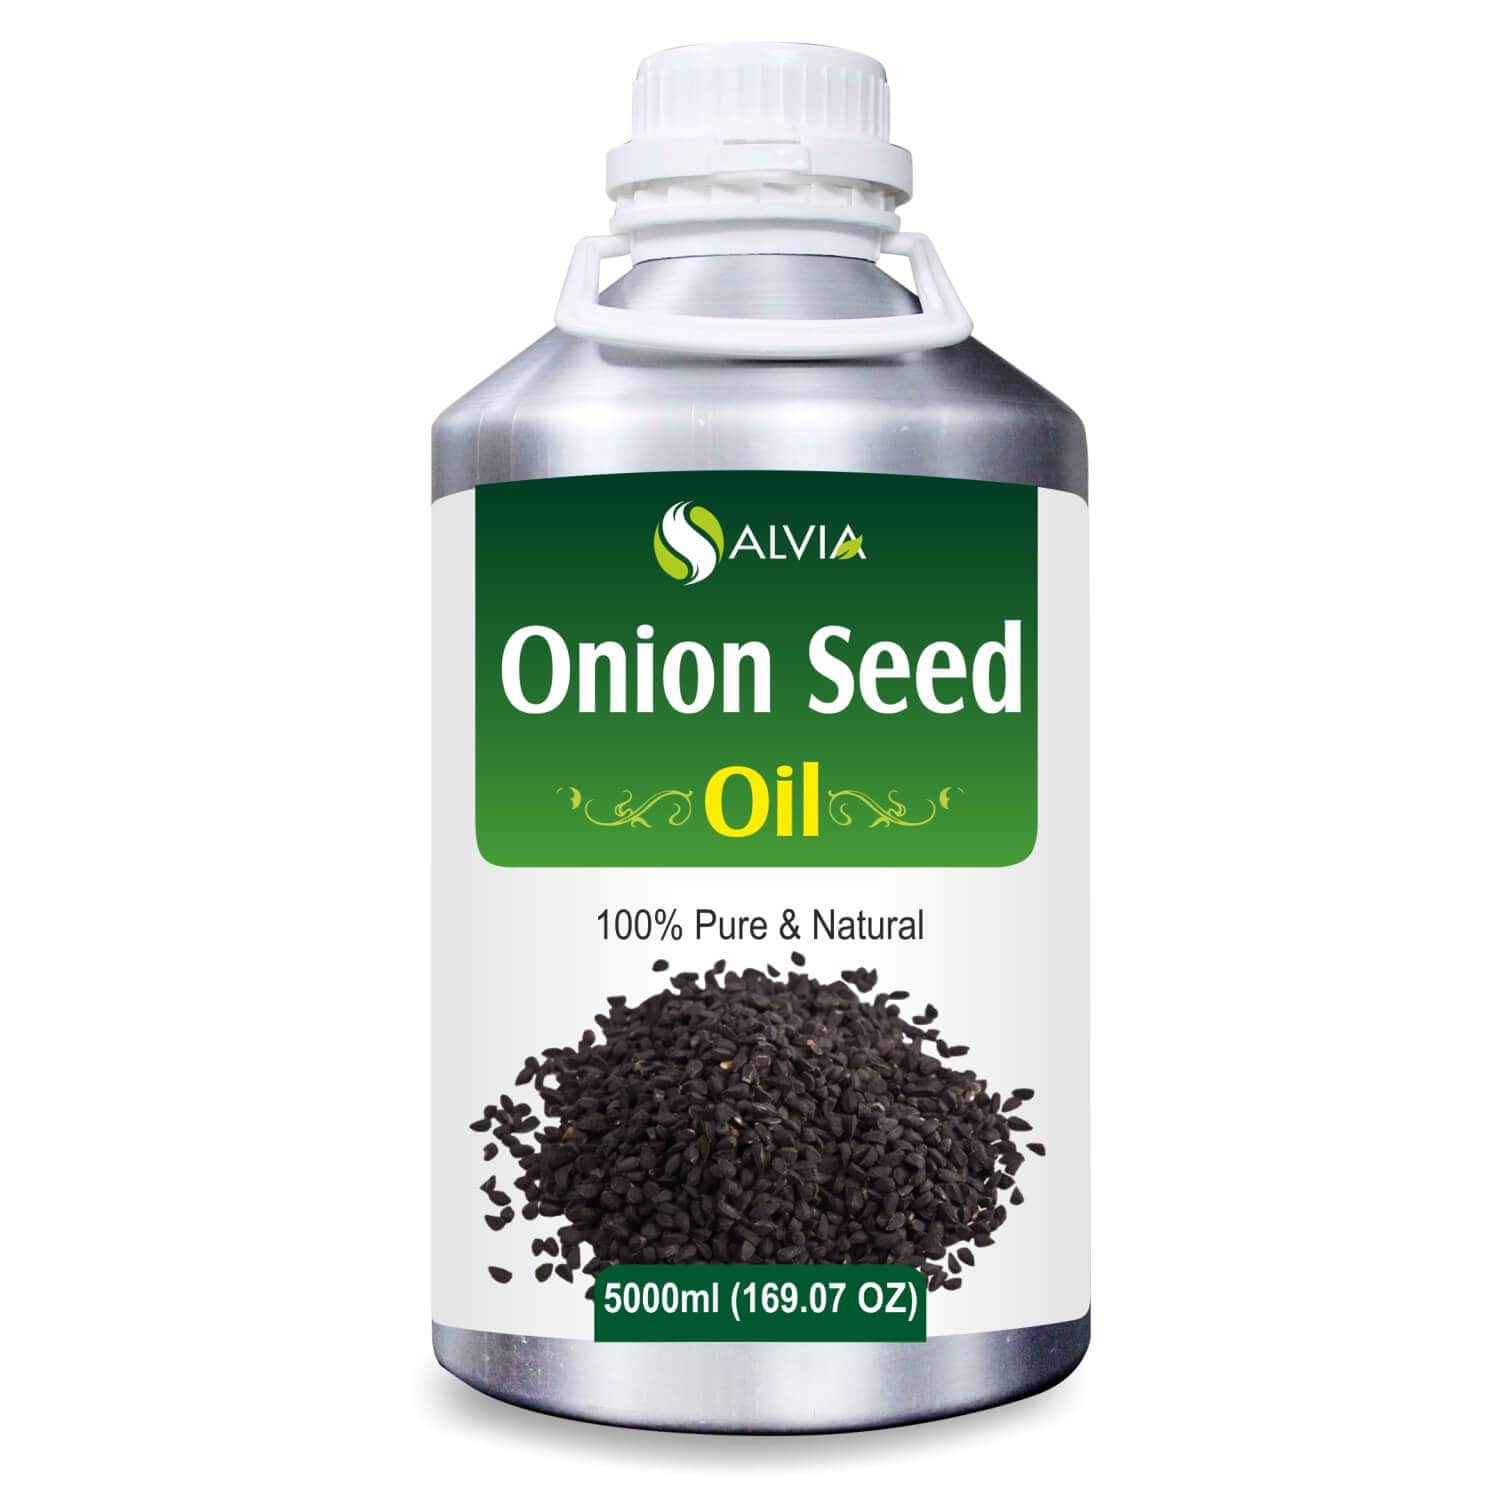 Salvia Natural Carrier Oils 5000ml Onion Seed Oil (Allium Cepa) 100% Natural Pure Carrier Oil